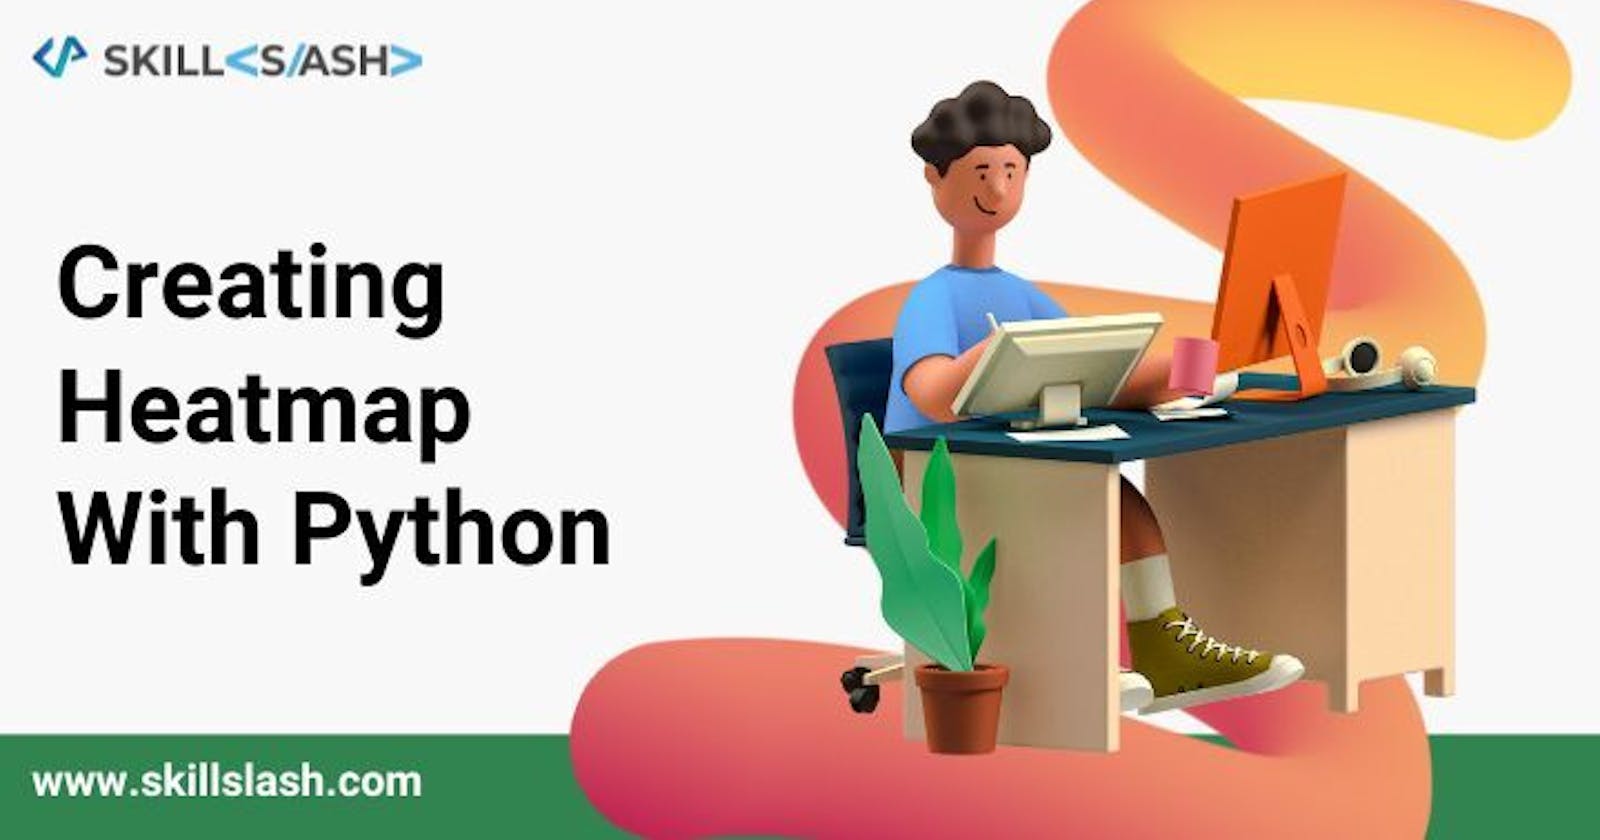 Creating Heatmap With Python